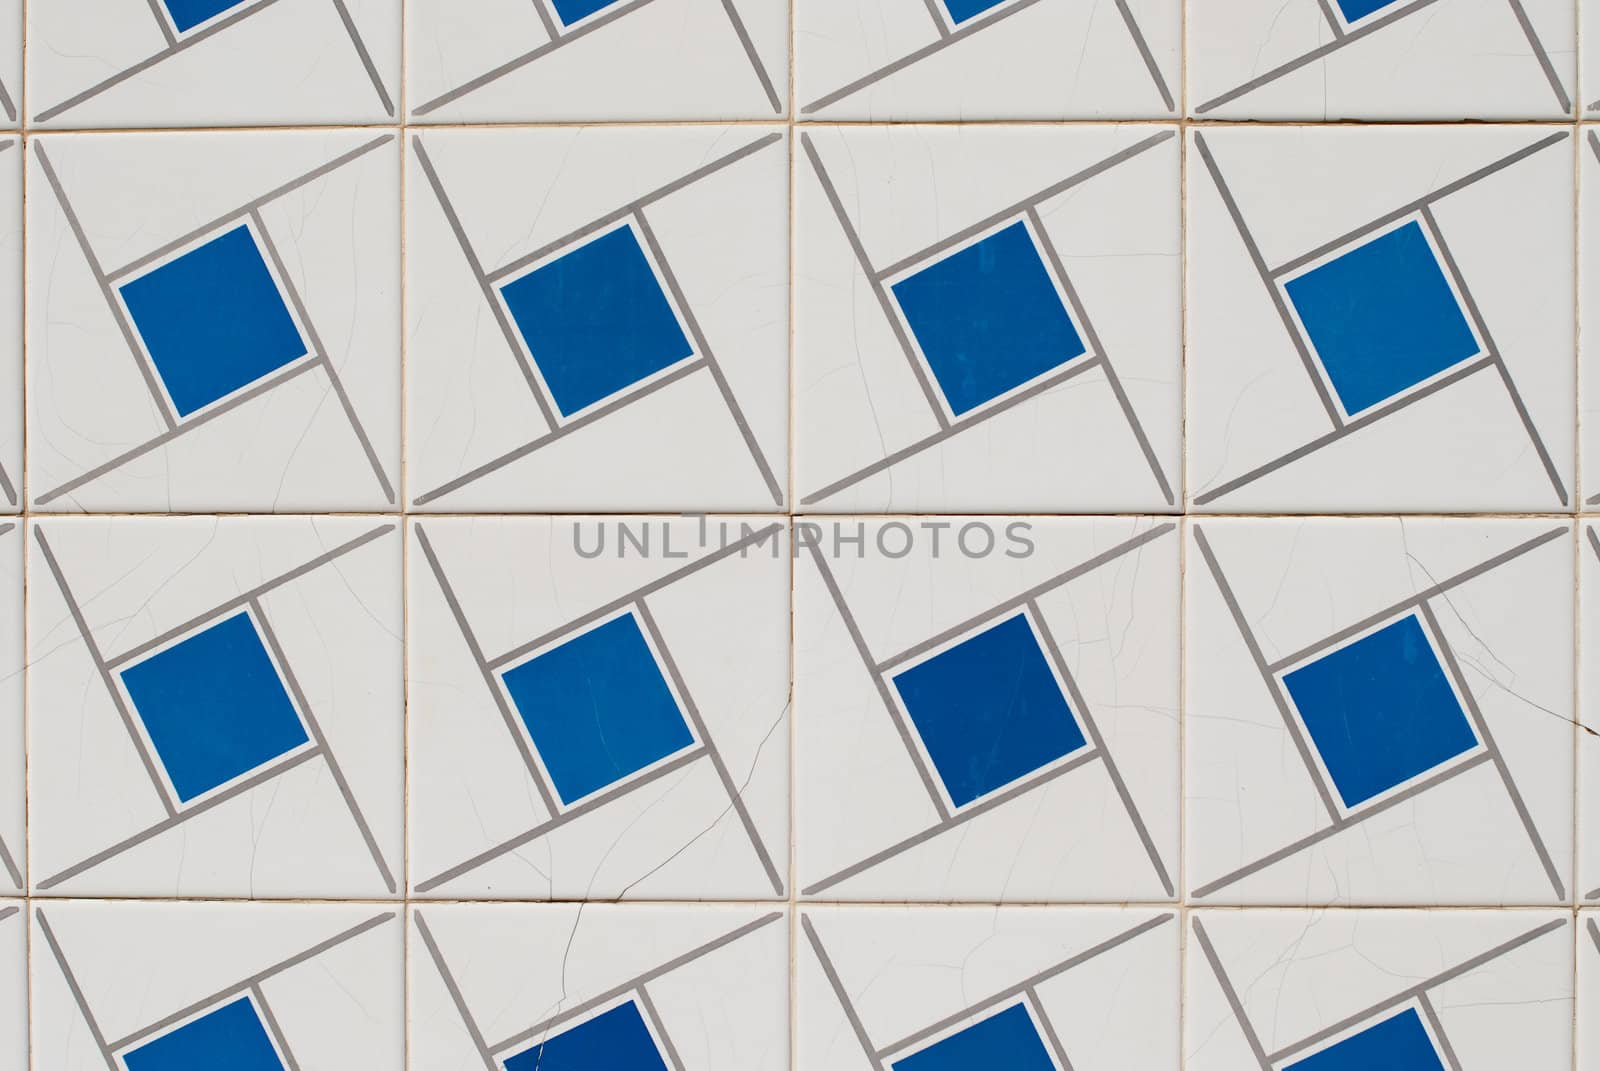 Portuguese glazed tiles 226 by homydesign